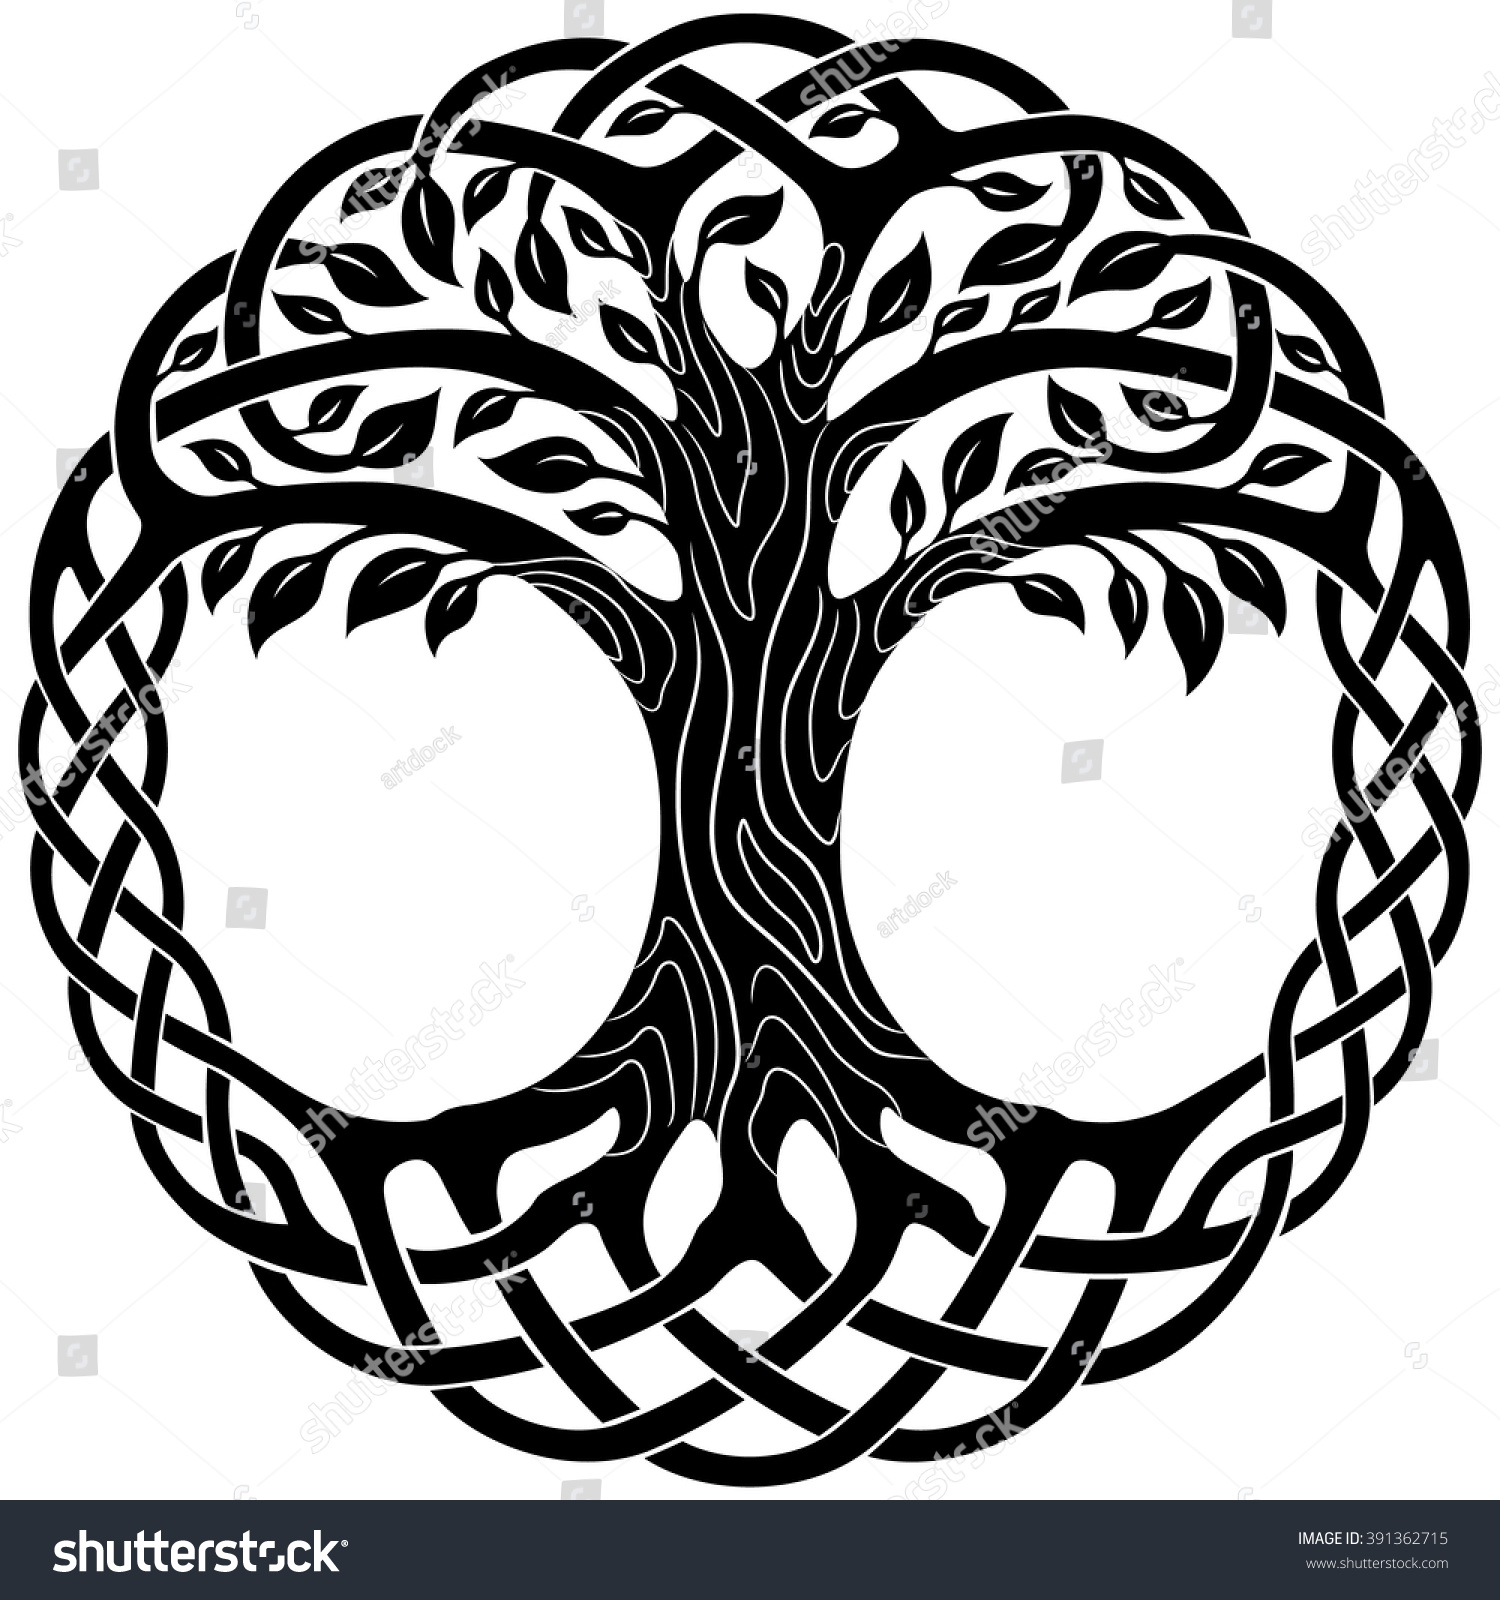 Дерево викингов вектор